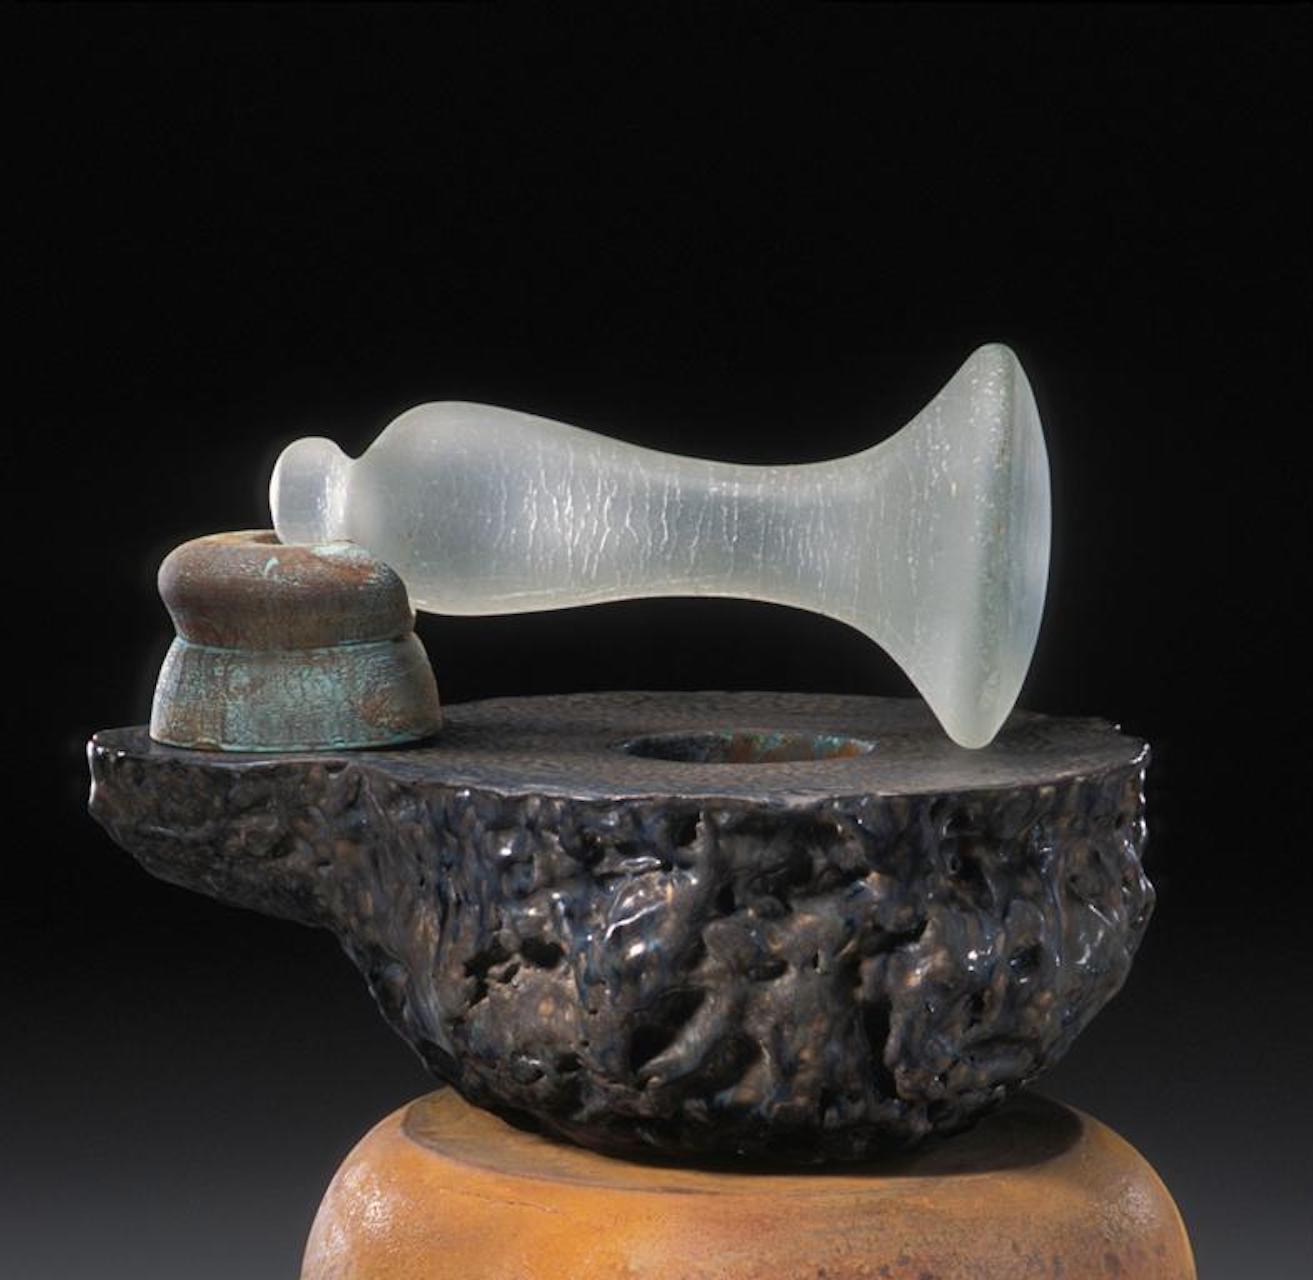 Glazed Richard Hirsch Ceramic Mortar and Blown Glass Pestle Sculpture #10, 2004 For Sale